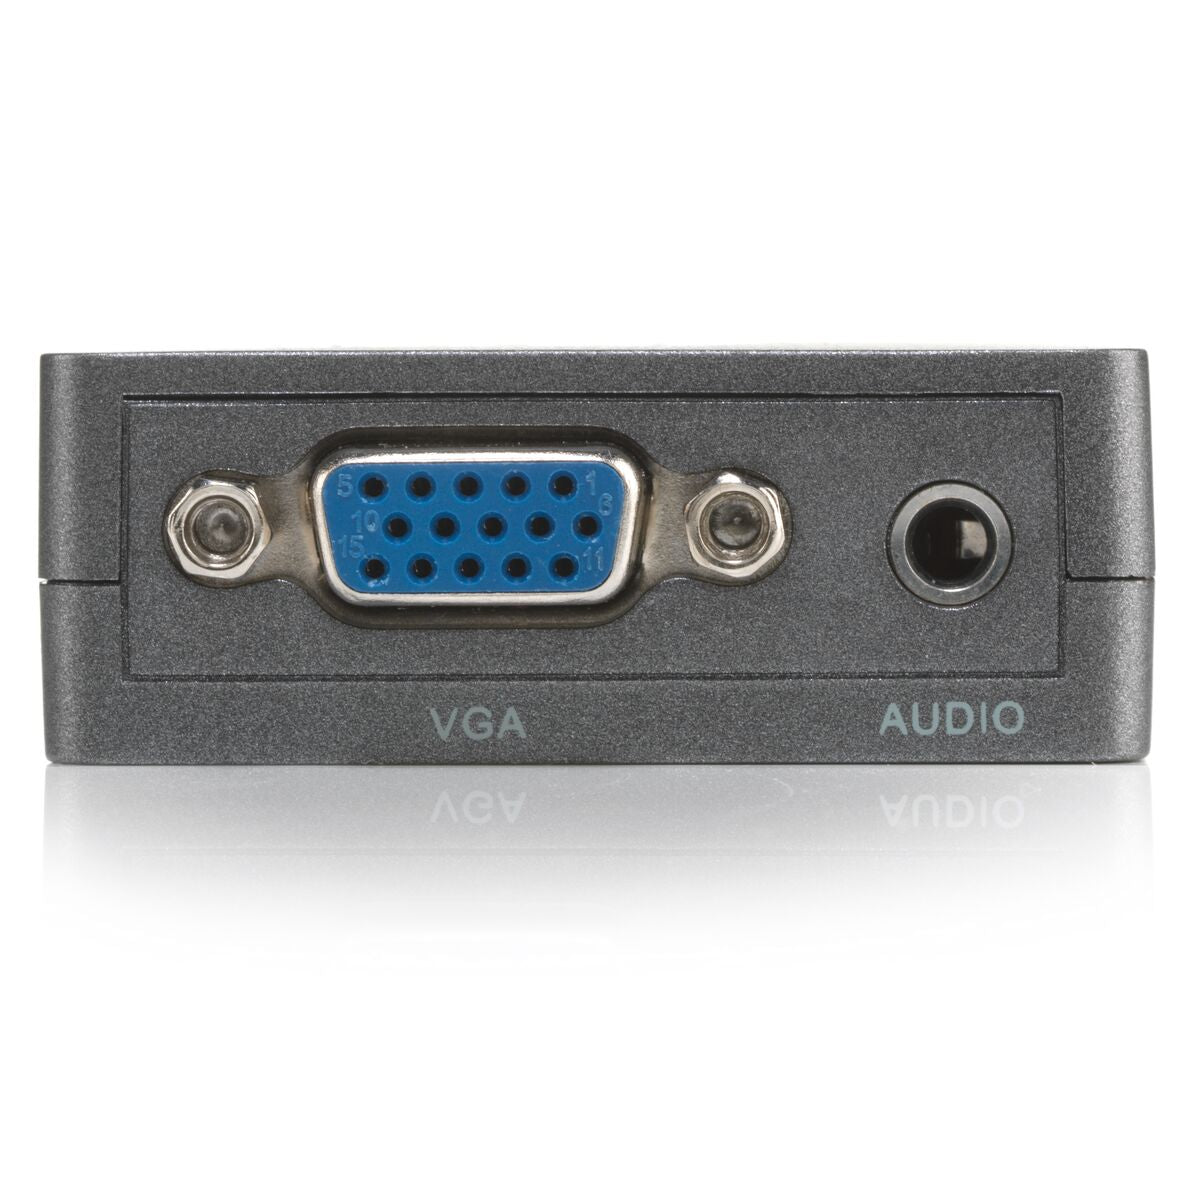 Connect VH51 - Adaptateur VGA HDMI